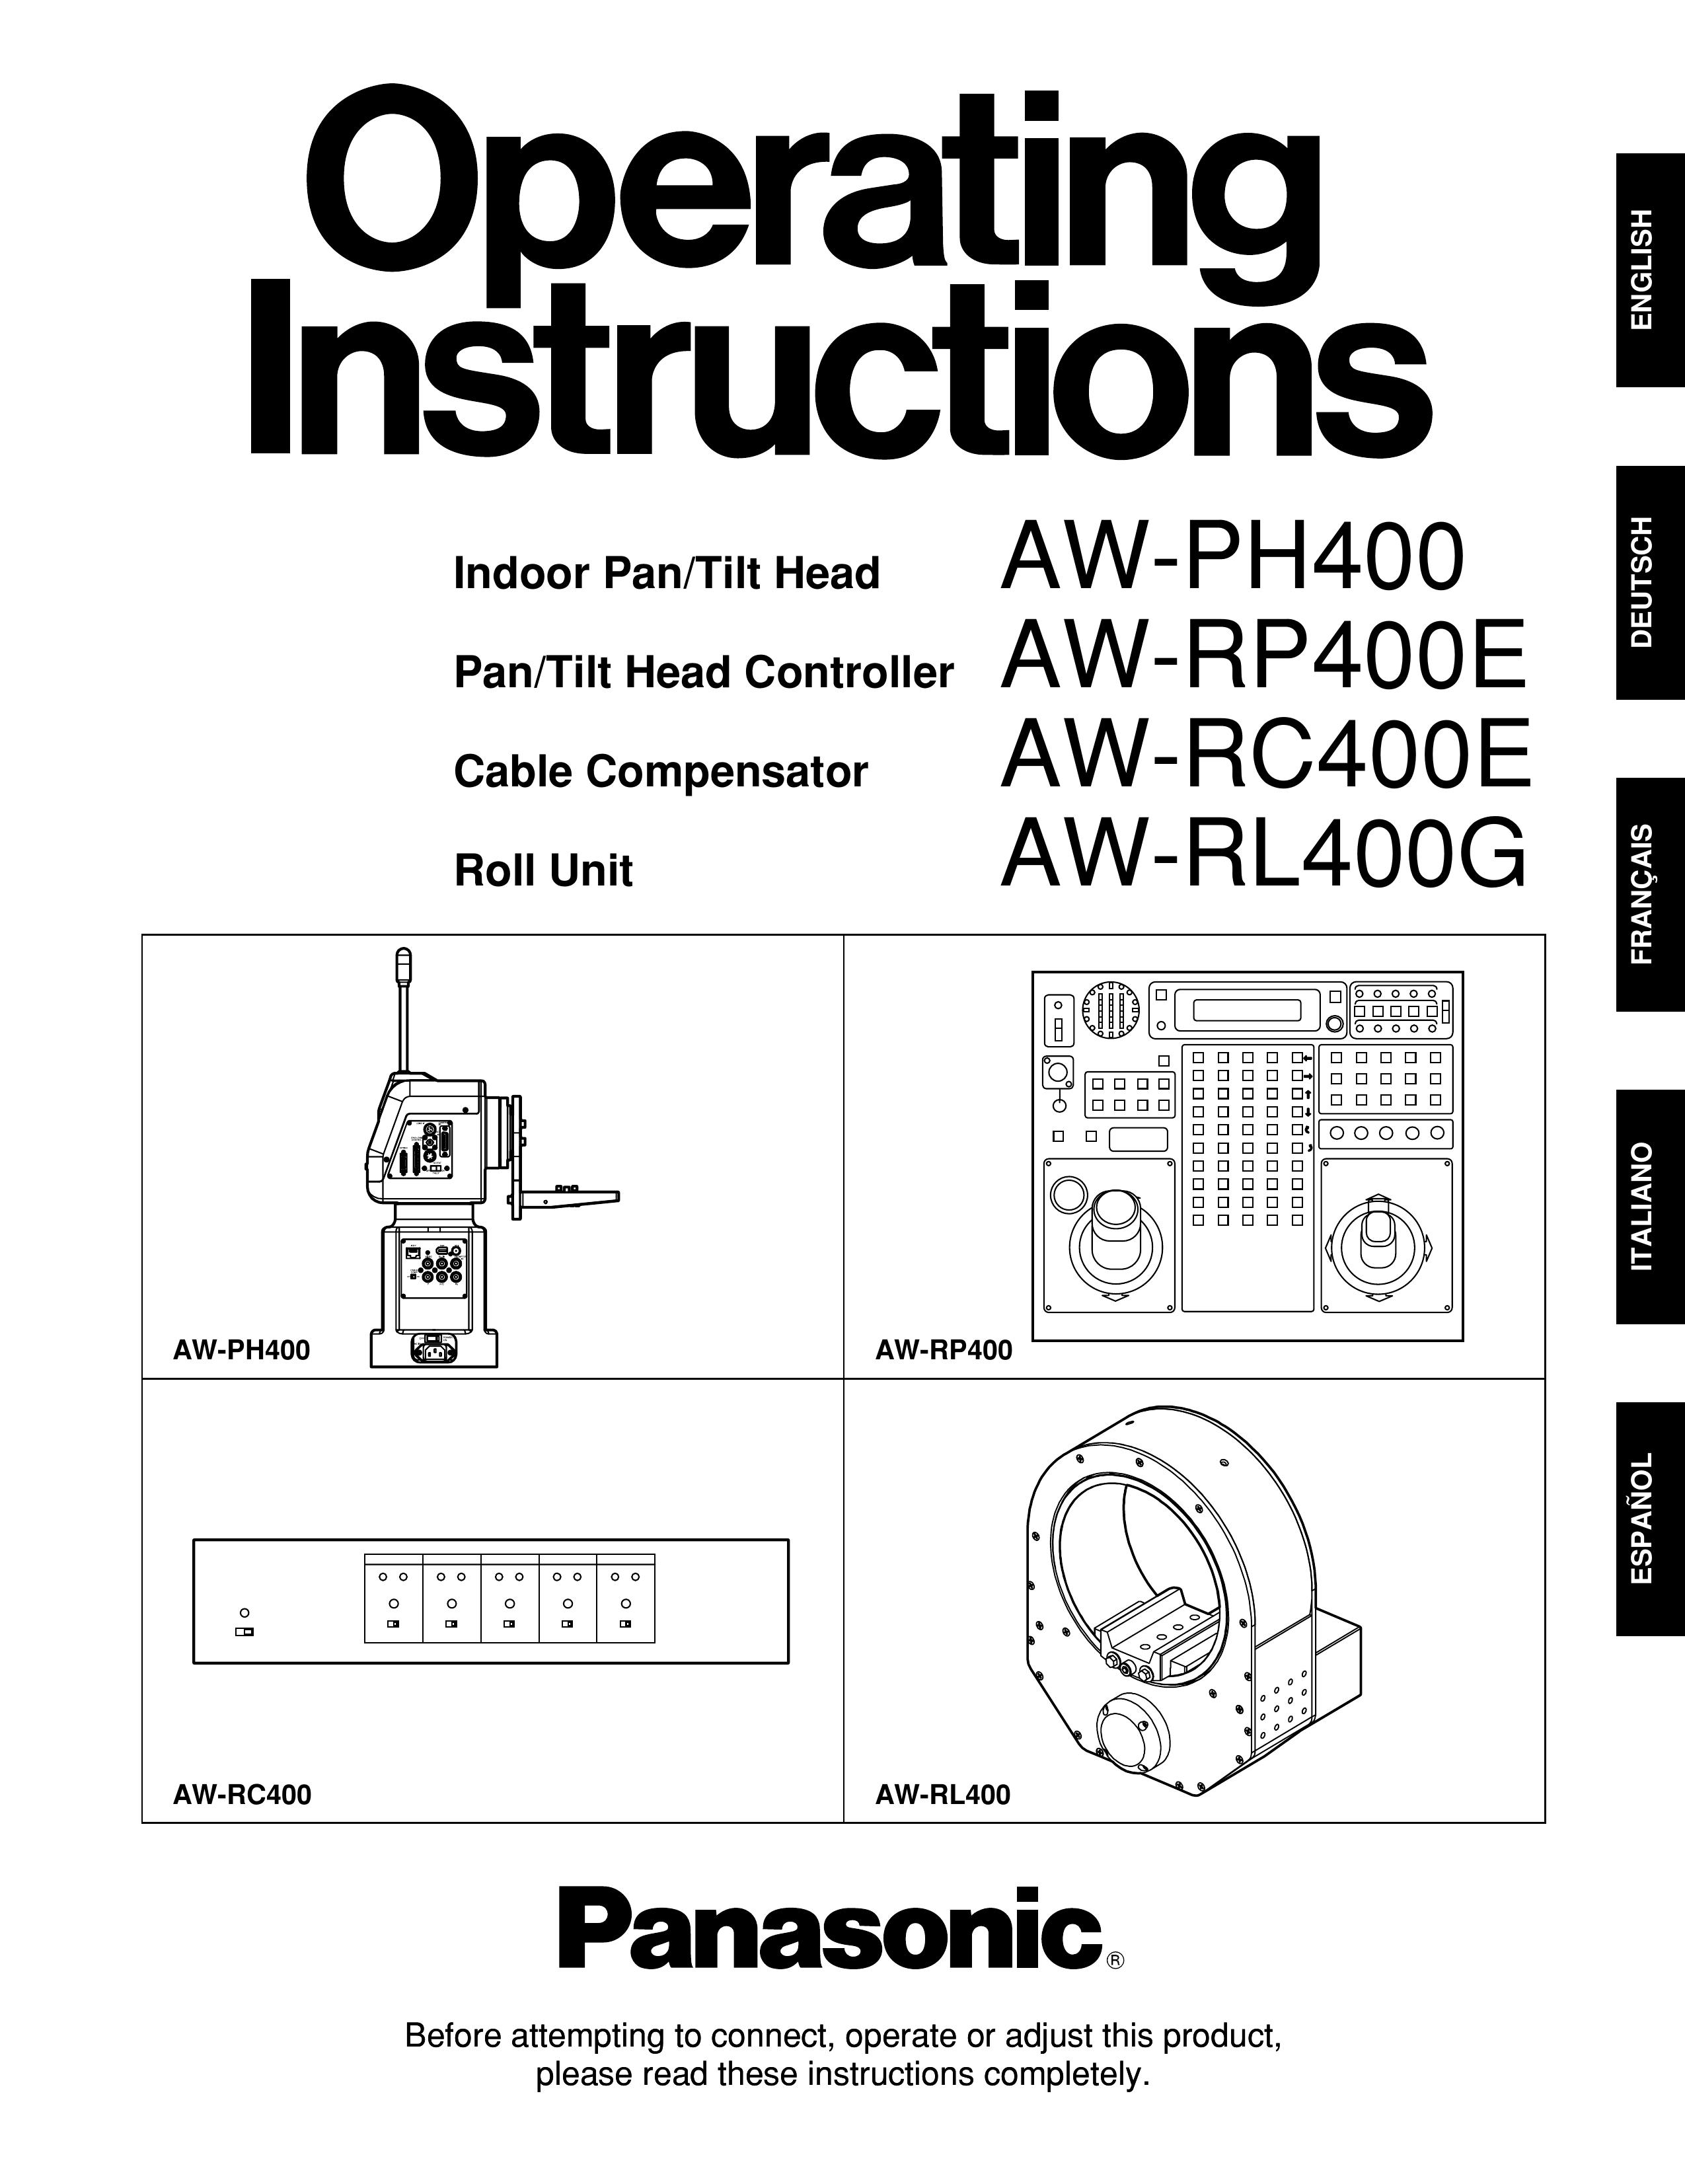 Panasonic AW-RC400E Digital Camera User Manual